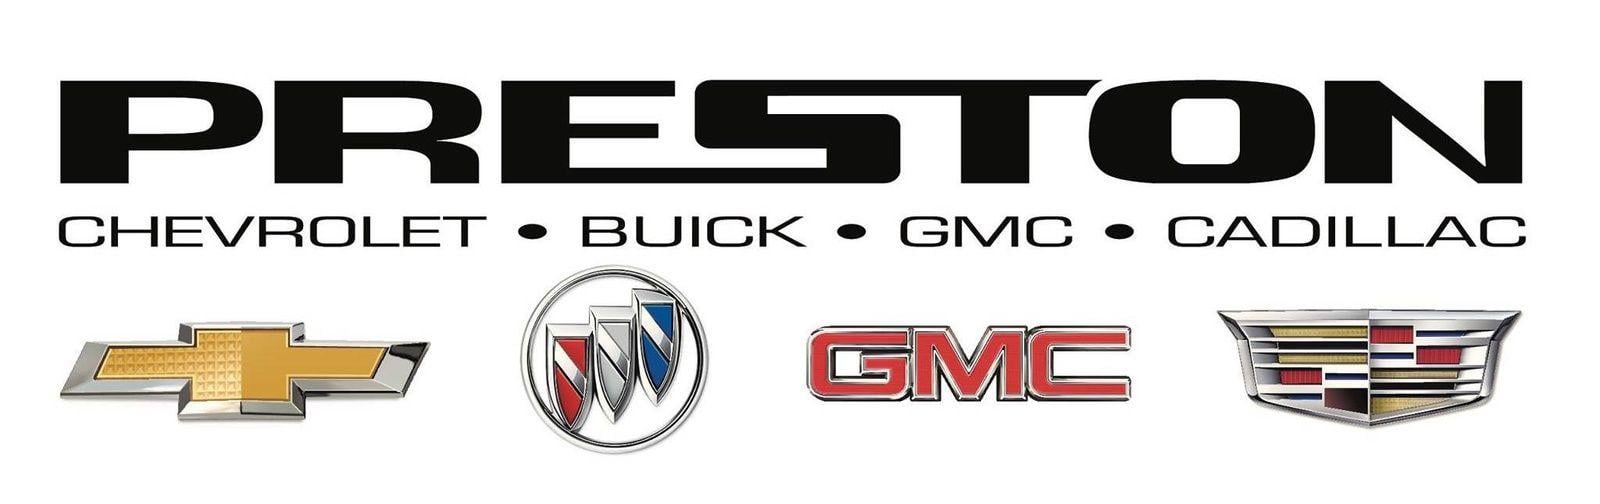 Chevy Buick Logo - Preston Chevrolet Buick GMC Cadillac Ltd., BC: Read